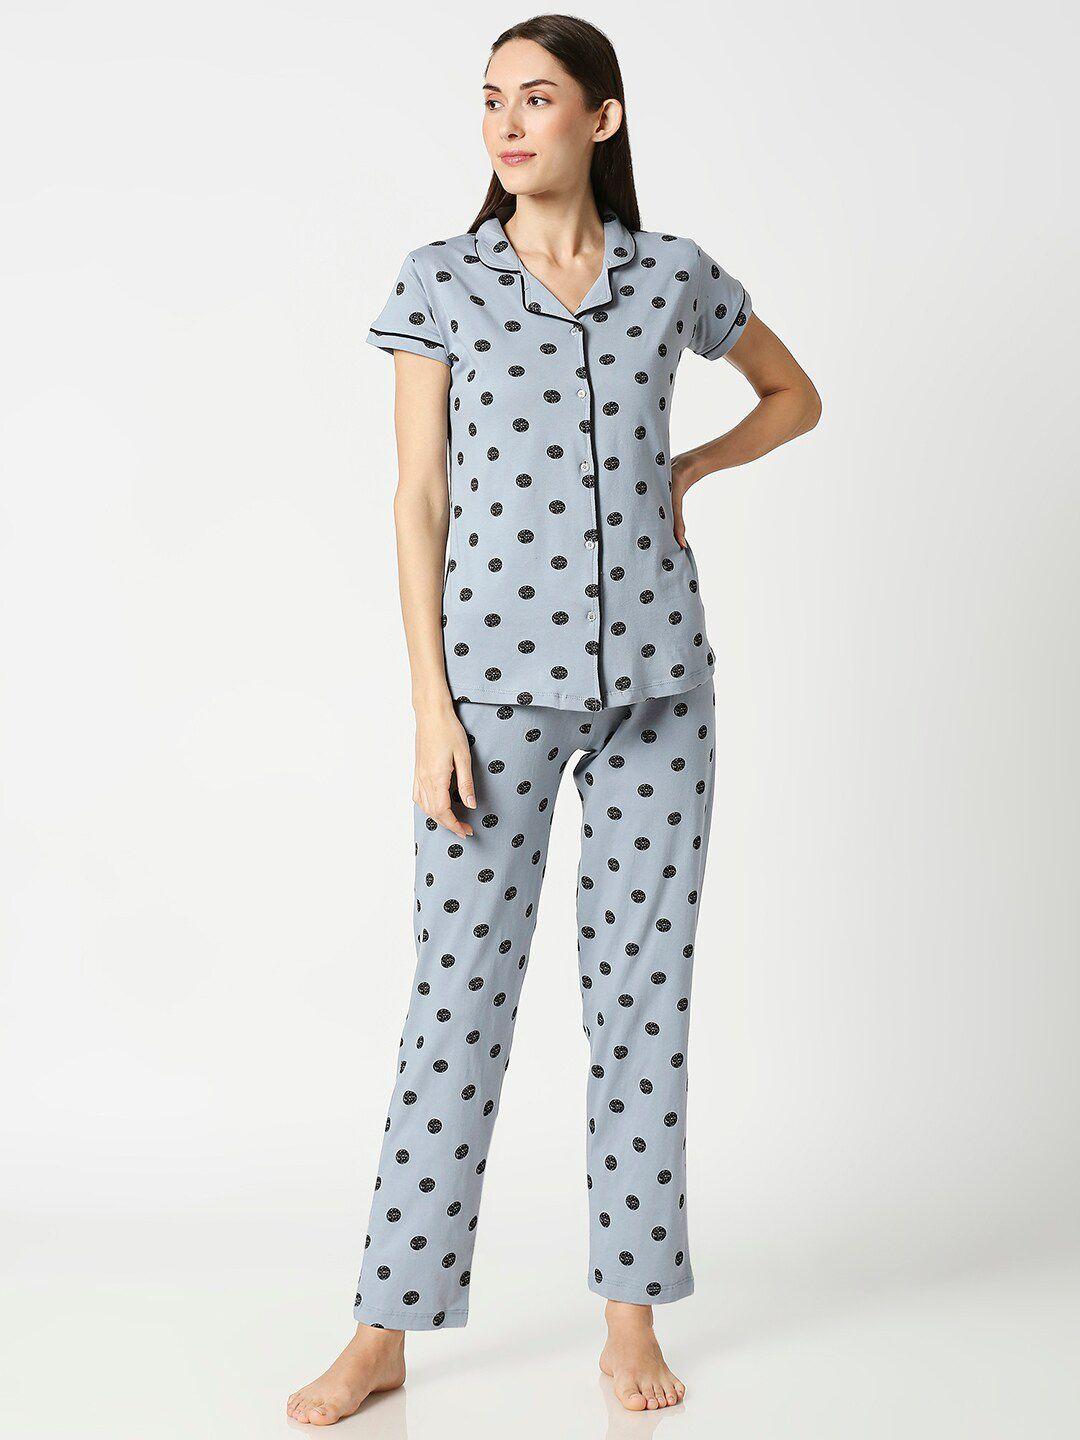 av2 women grey & black polka dots printed night suit